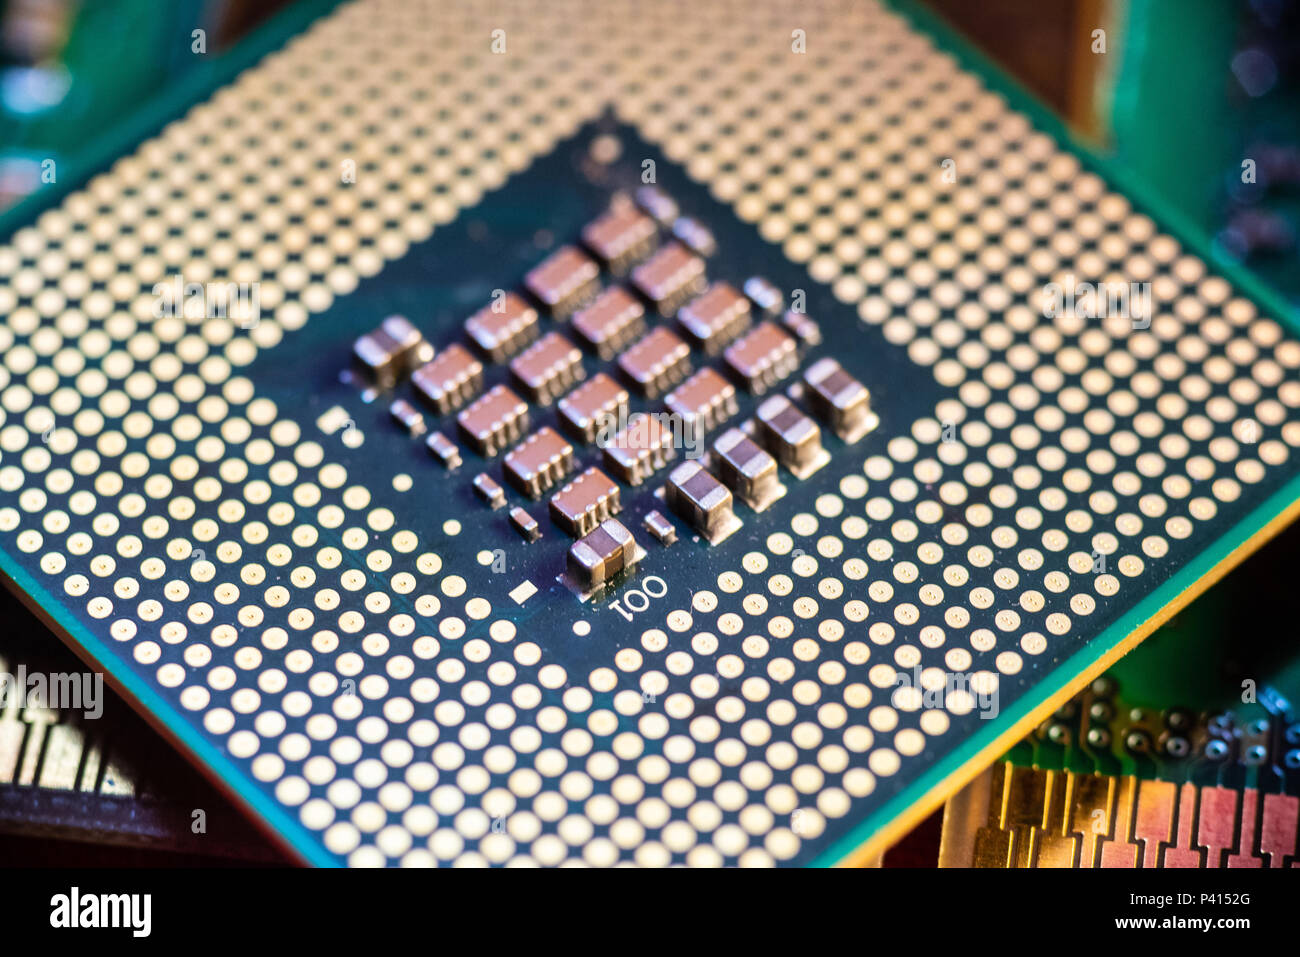 Land Grid Array CPU on top of random access memory sticks. Stock Photo